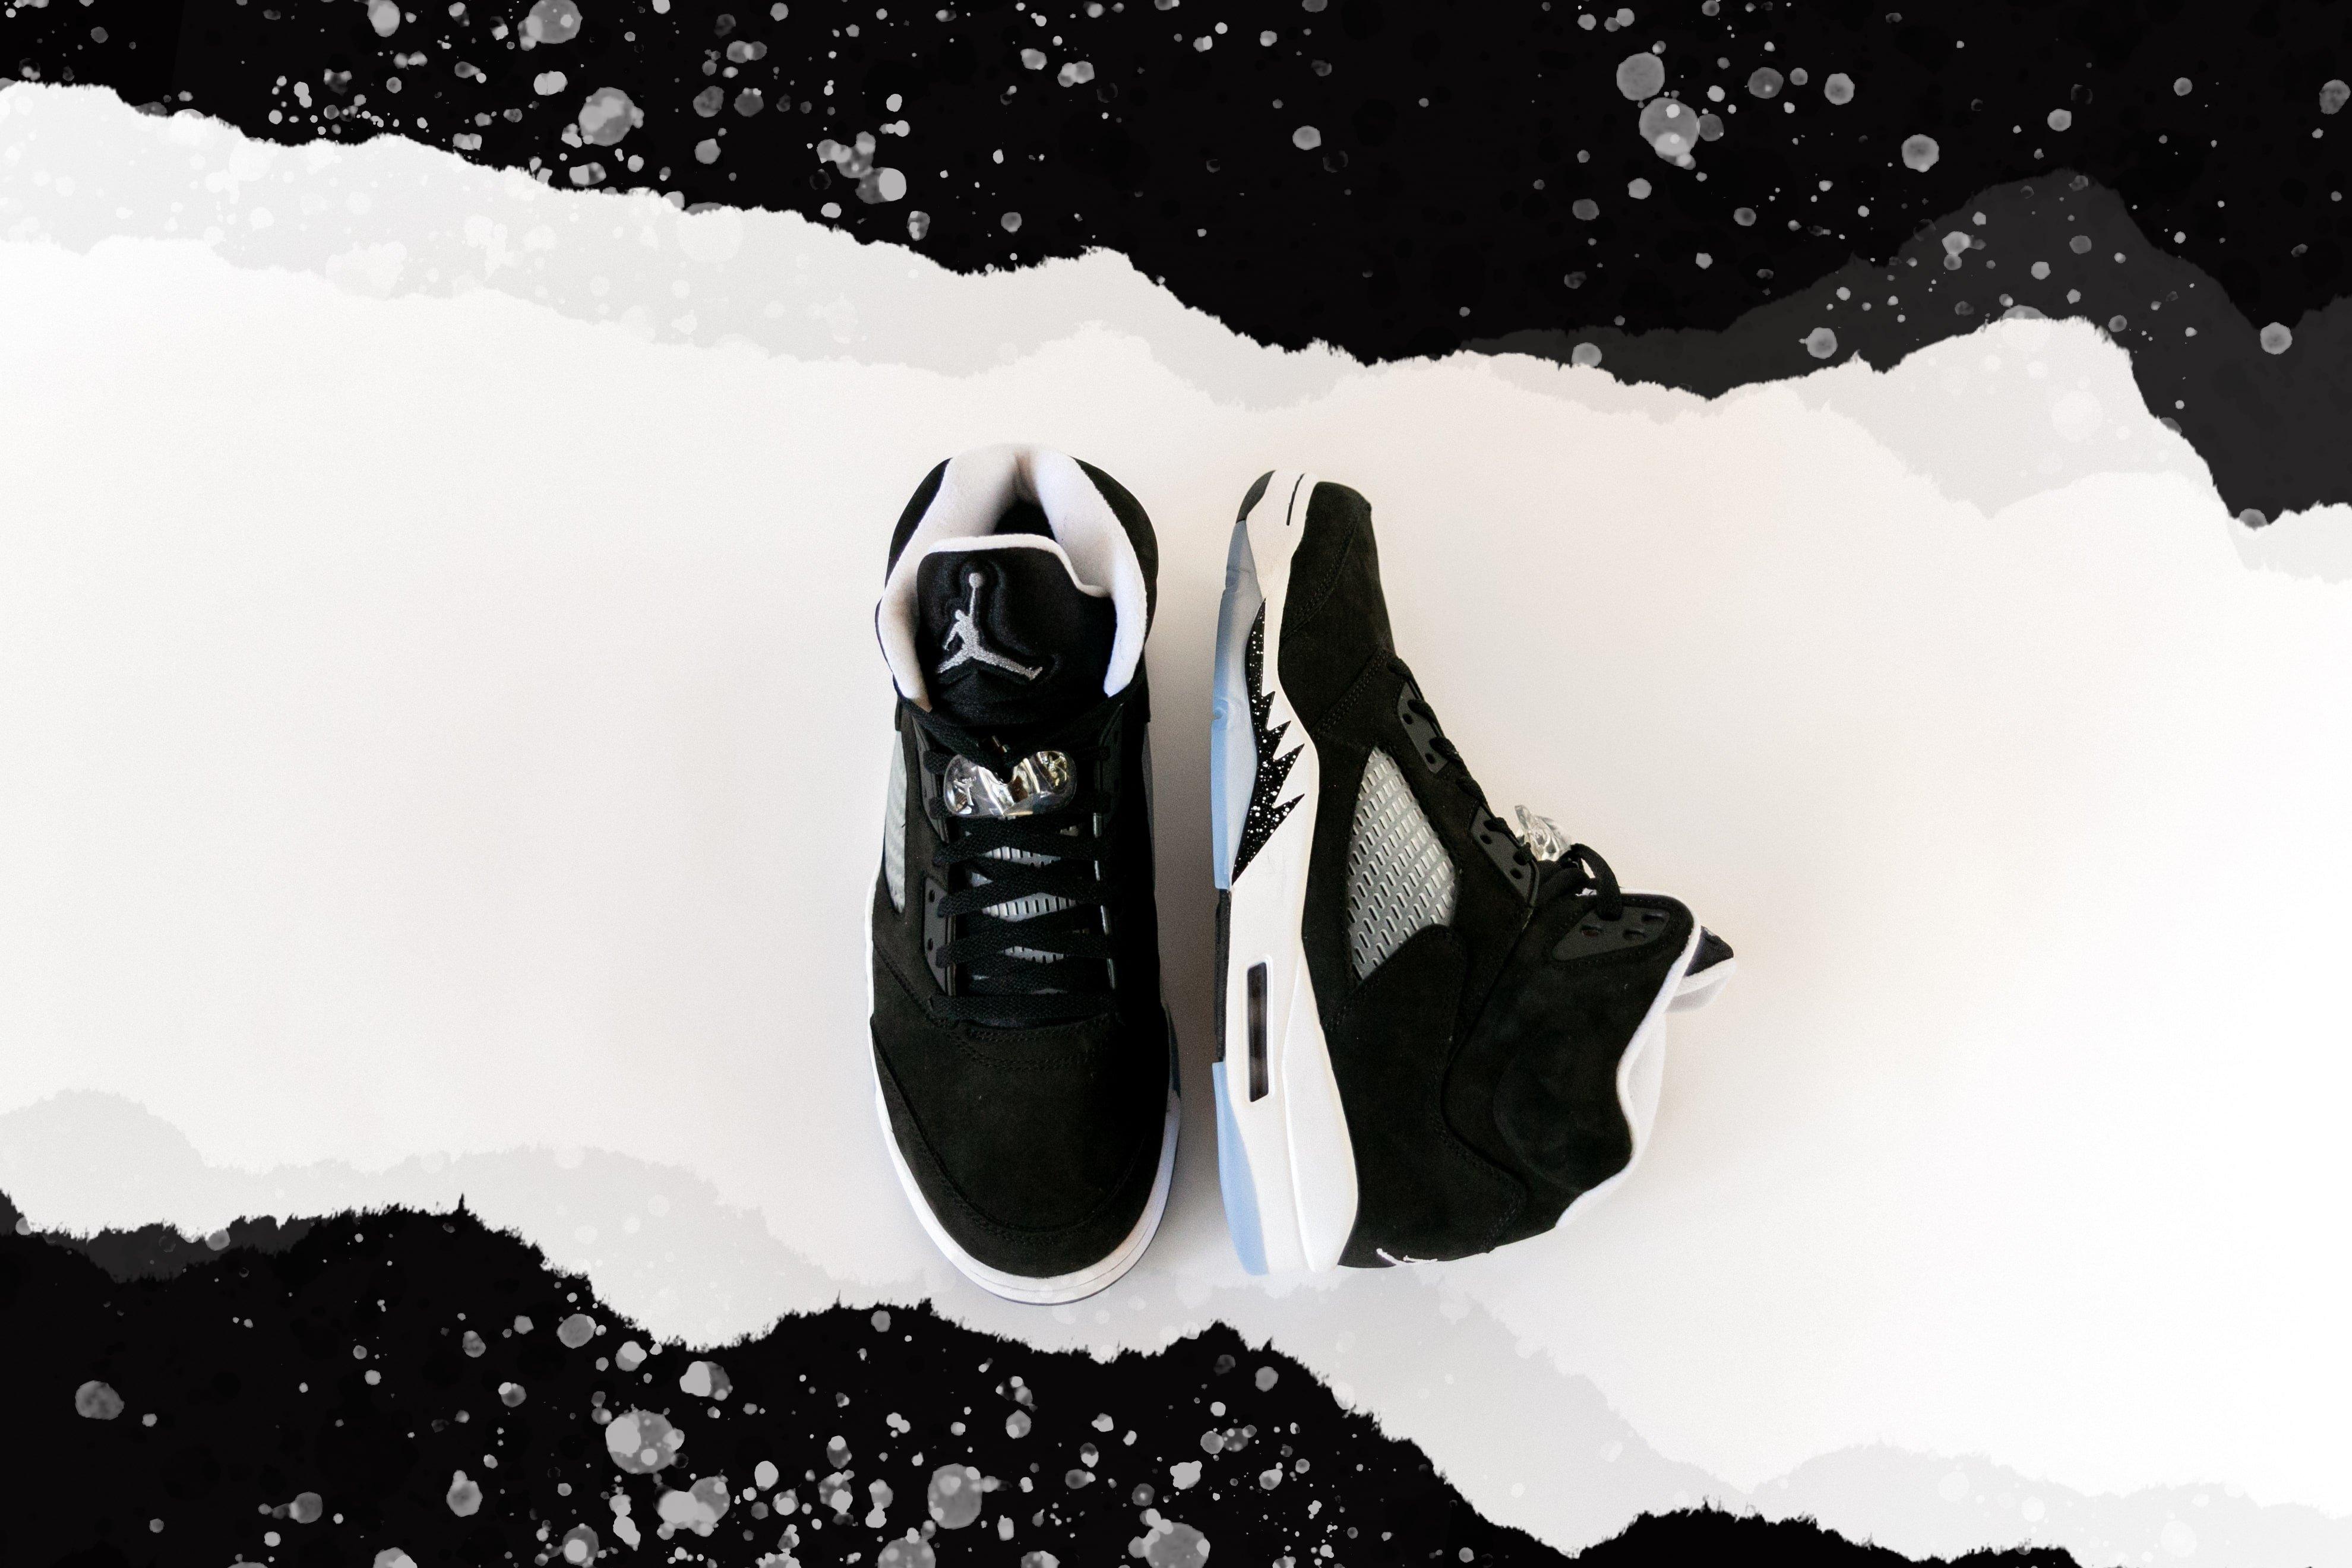 Sneakers Release – Jordan 5 Retro “Moonlight”